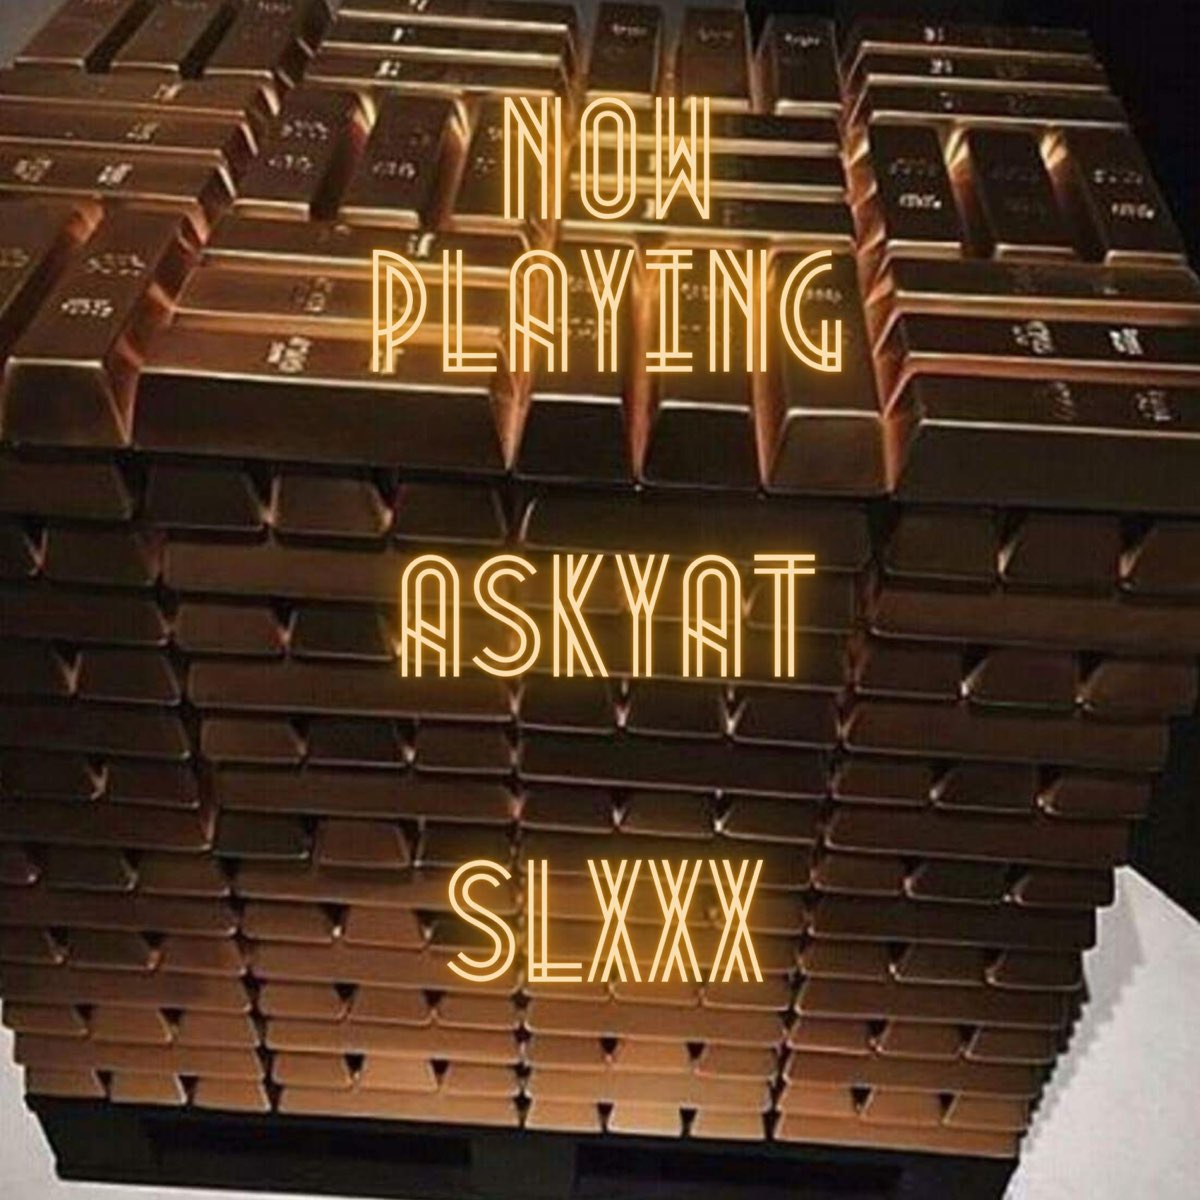 Slxxx - Single - Album by As-Kyat - Apple Music